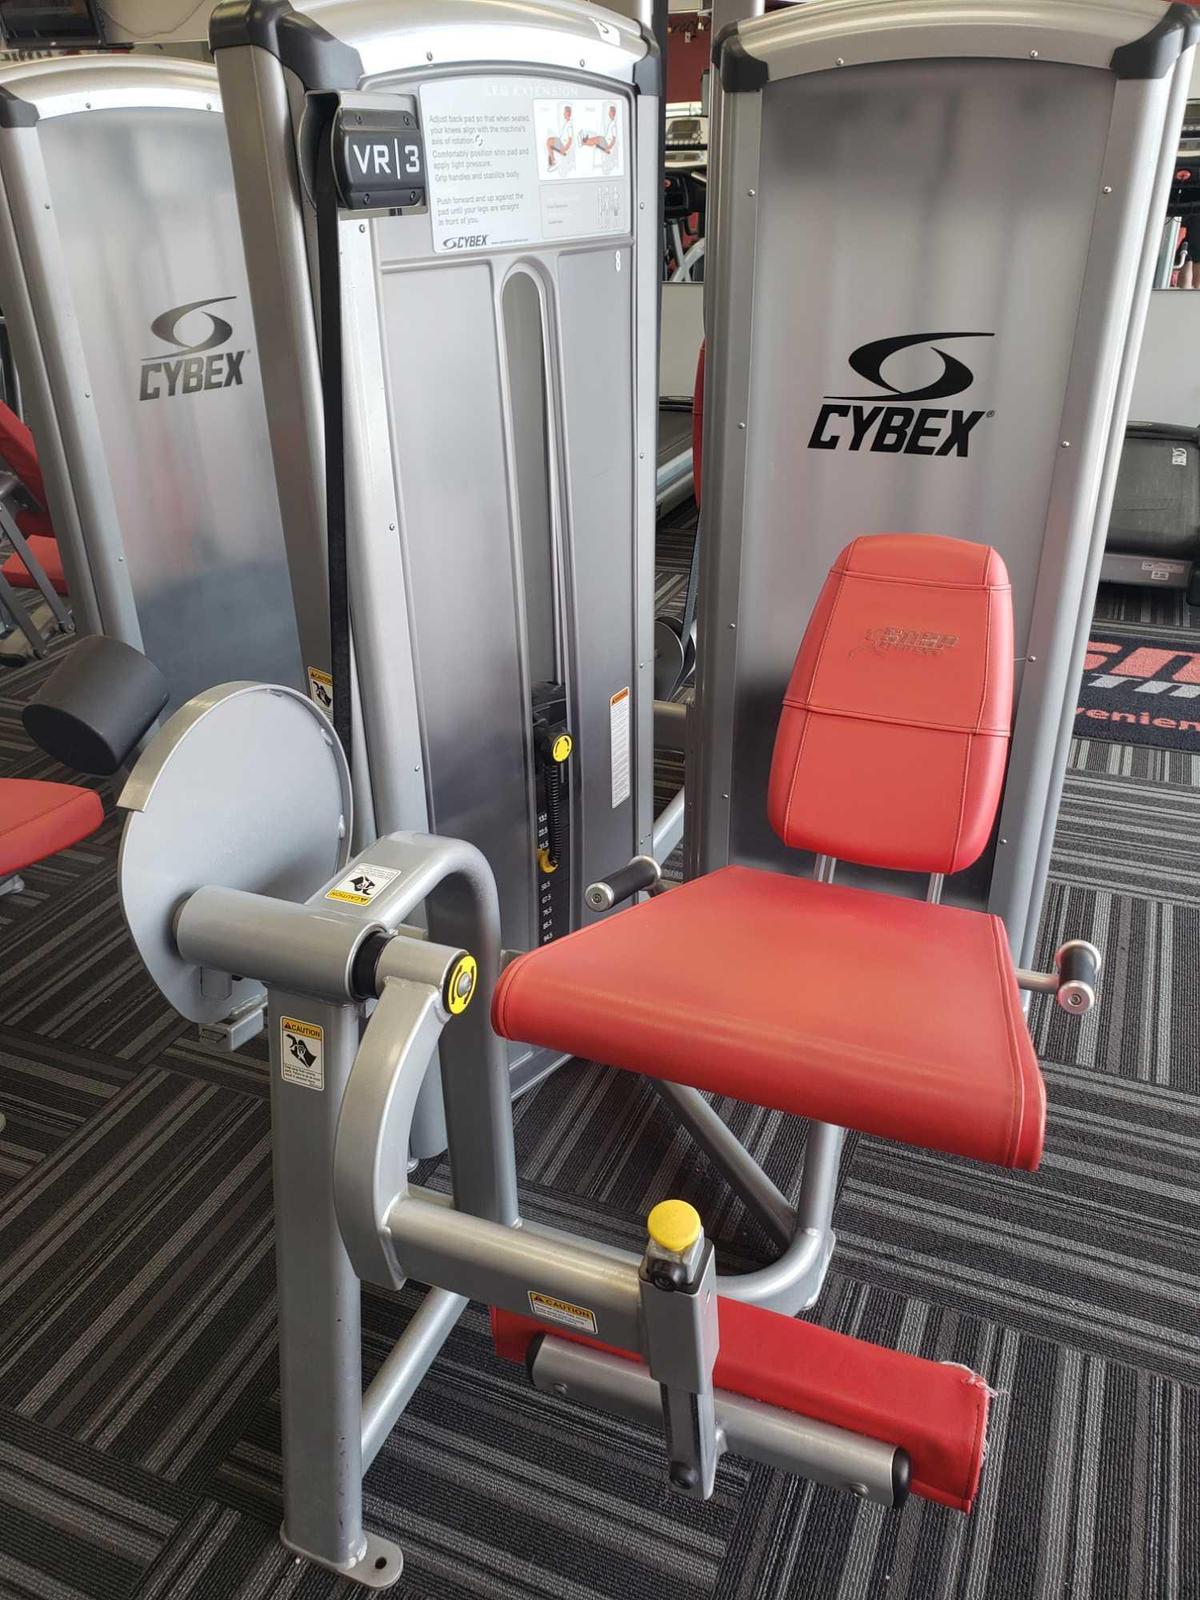 Cybex VR3 Leg Extension Machine